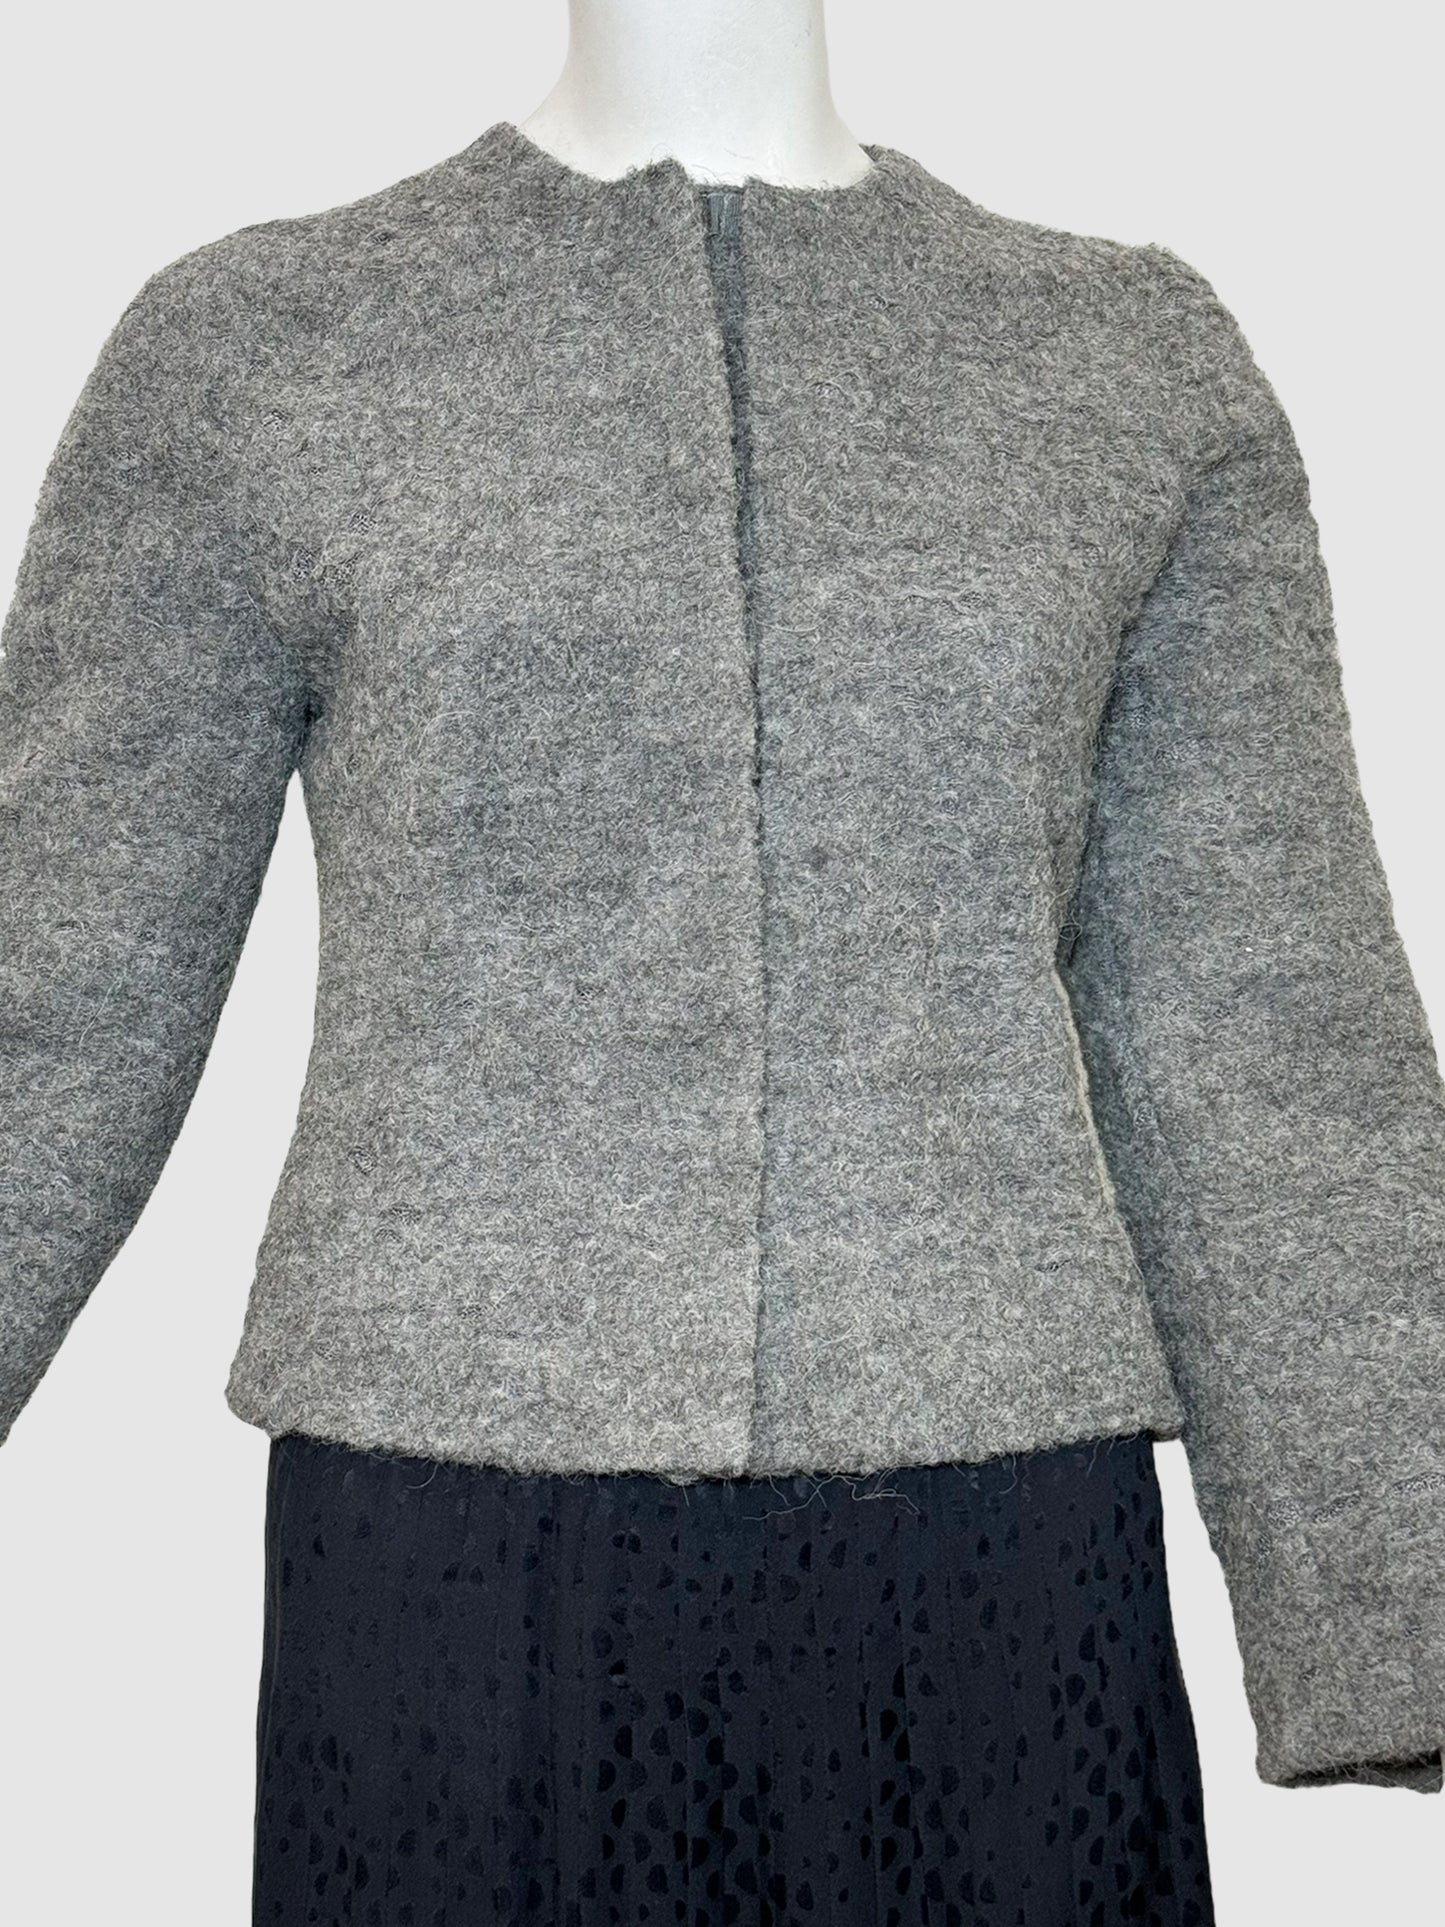 Wool Cropped Jacket - Size 40